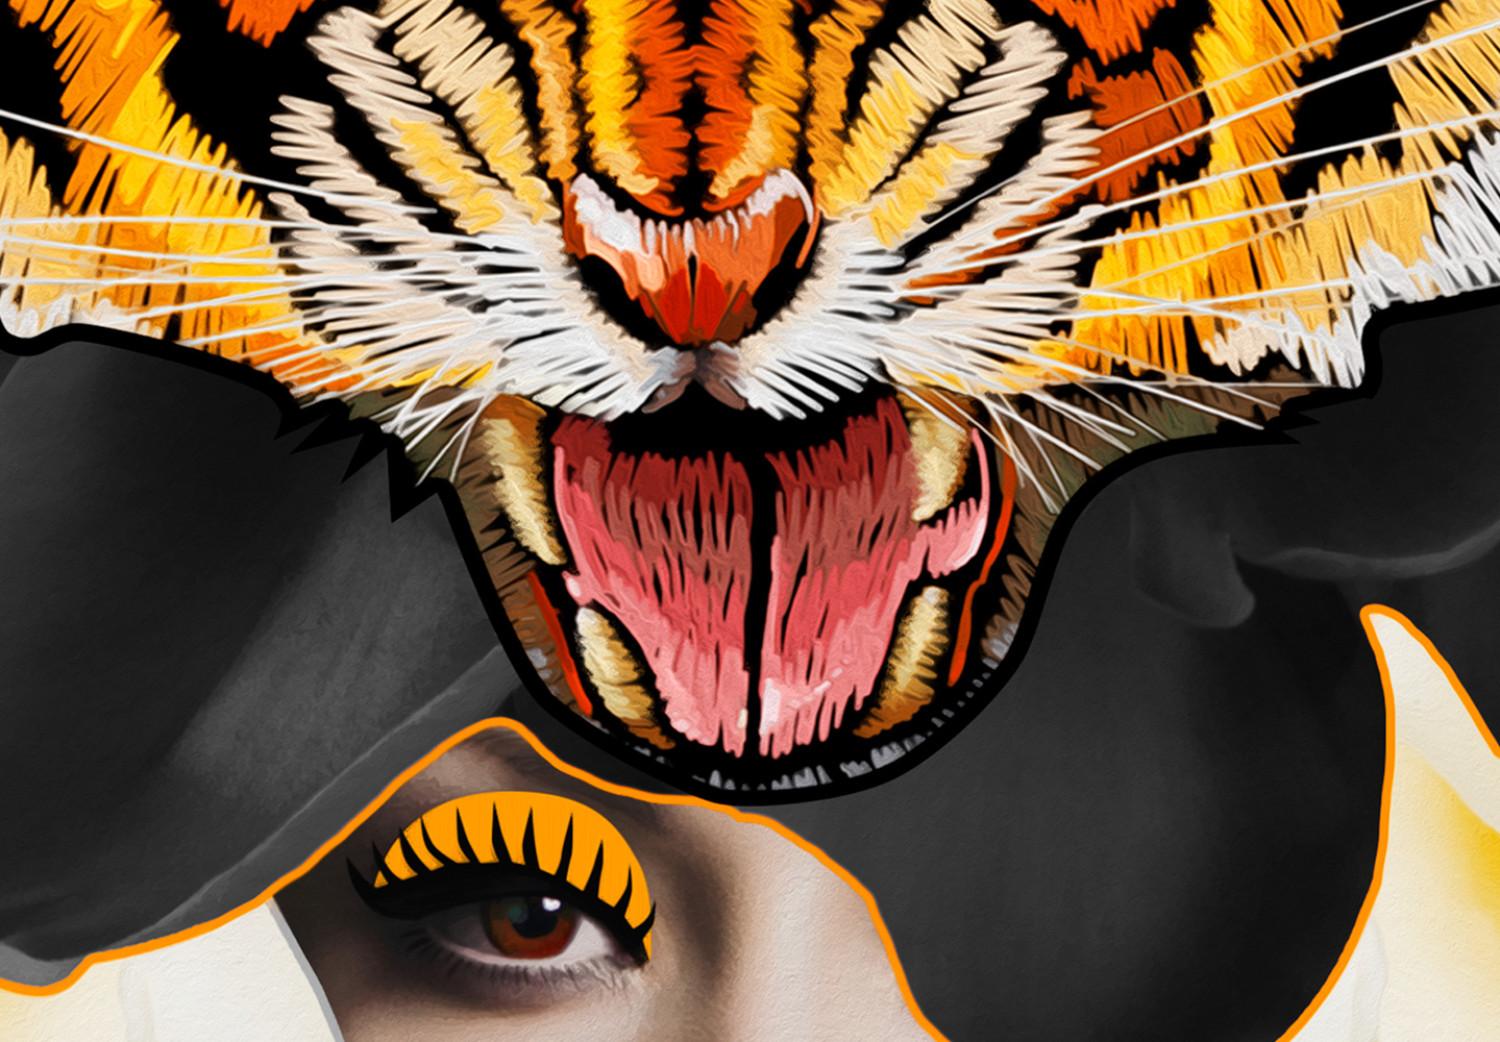 Póster Ojo de tigre - mujer abstracta con traje de tigre sobre fondo gris